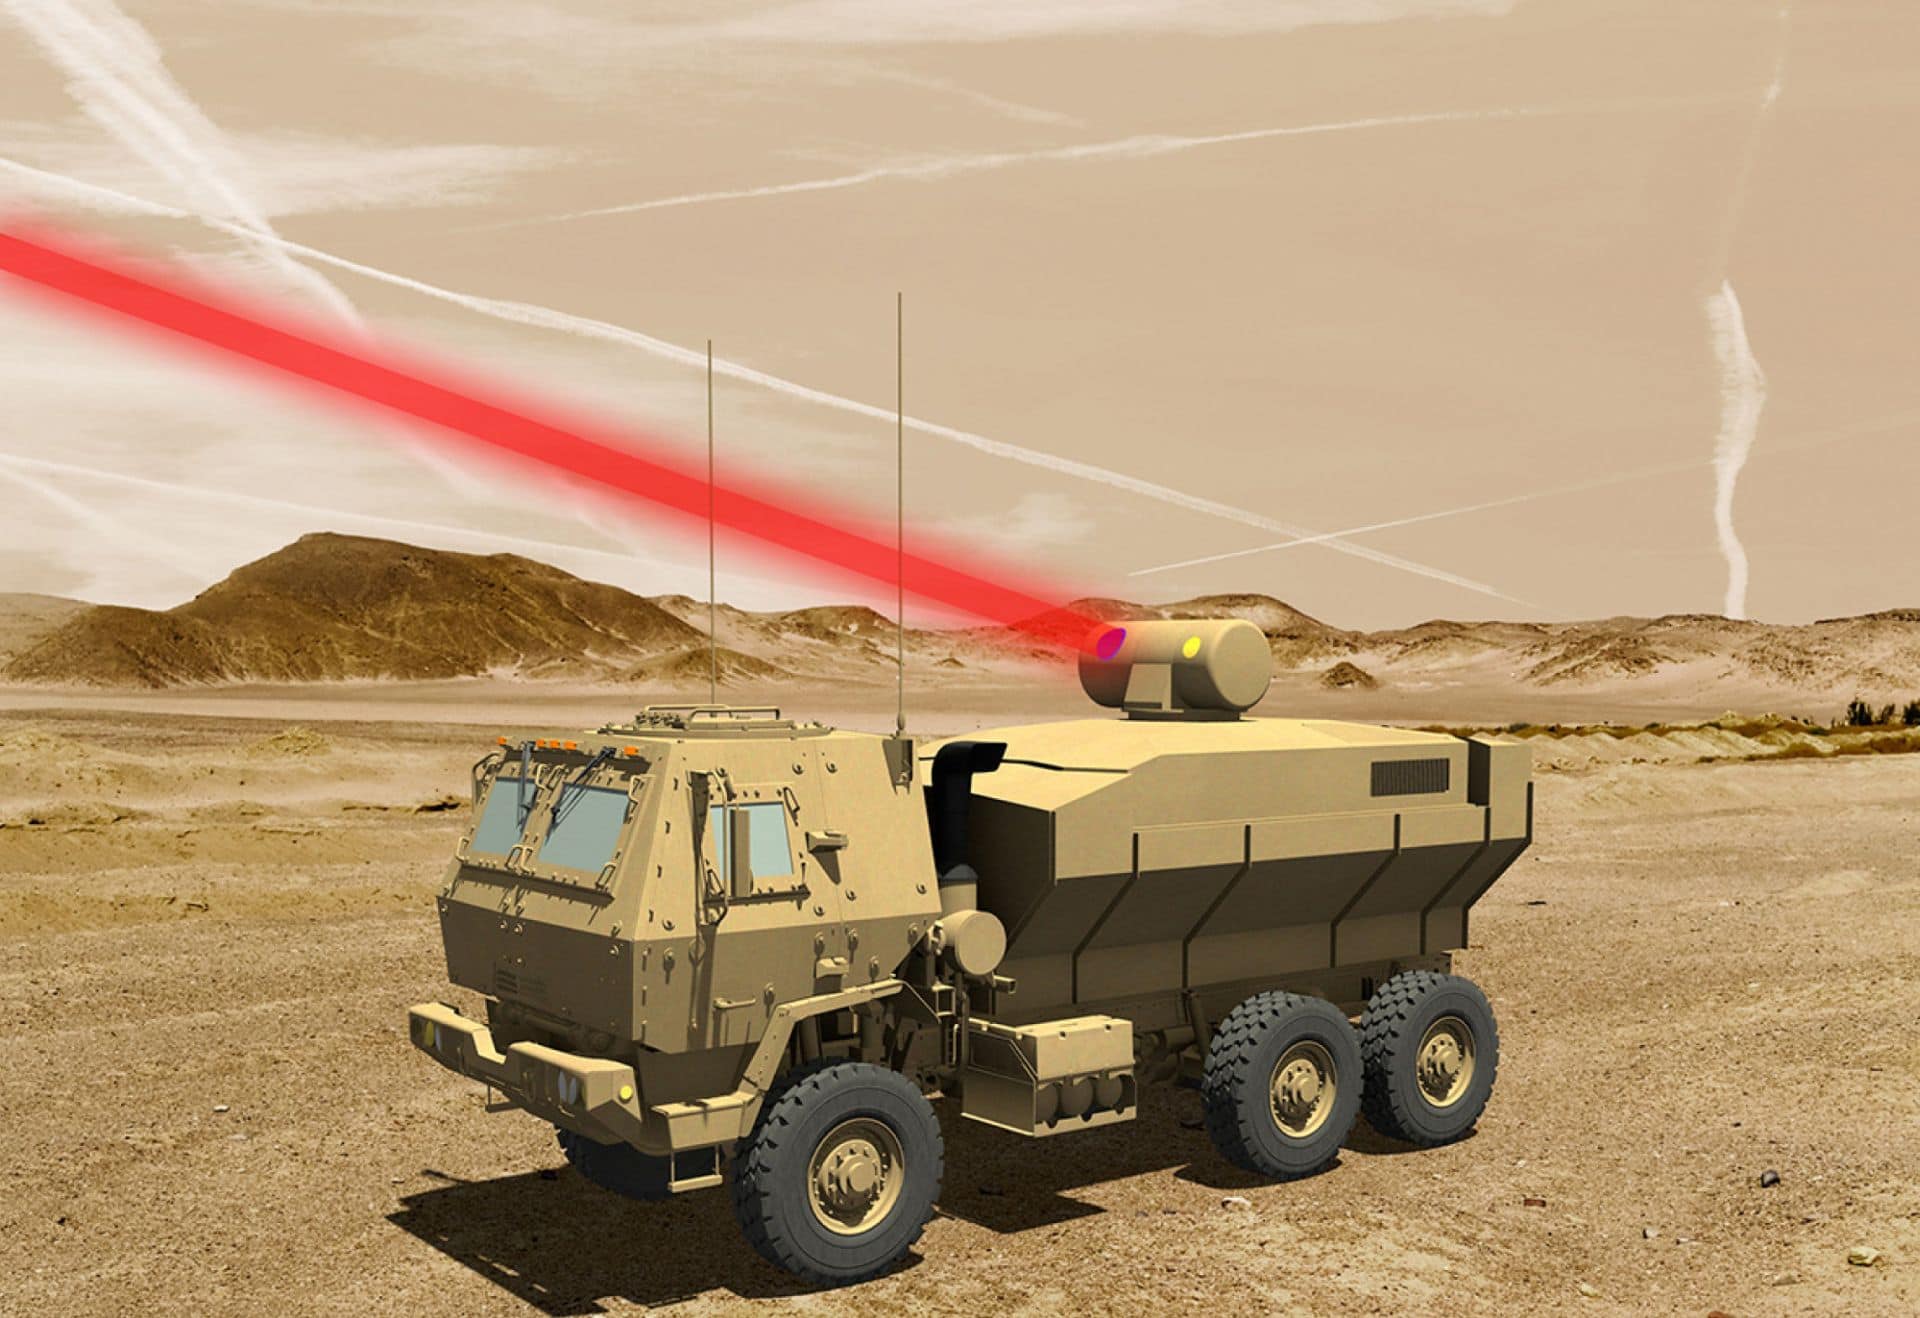 Future_Mobile_Tactical_Vehicle-laser-wea